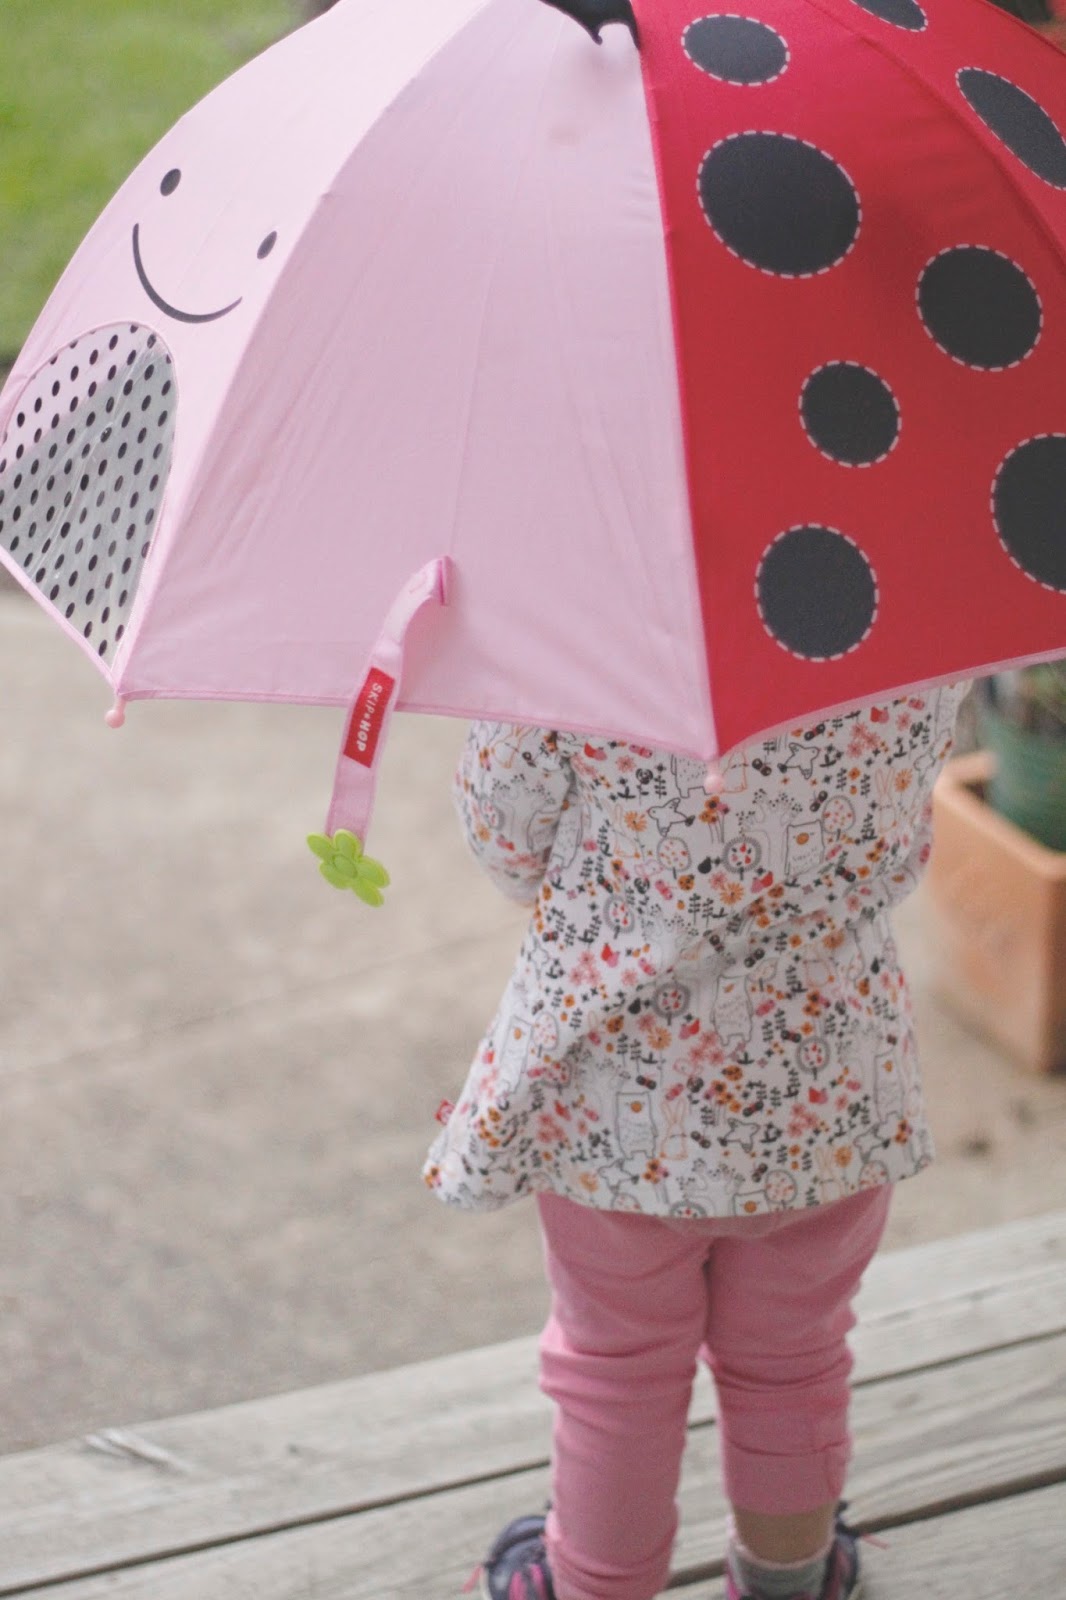 review of ladybug Zoobrella umbrella by Skip Hop and Zutano kids